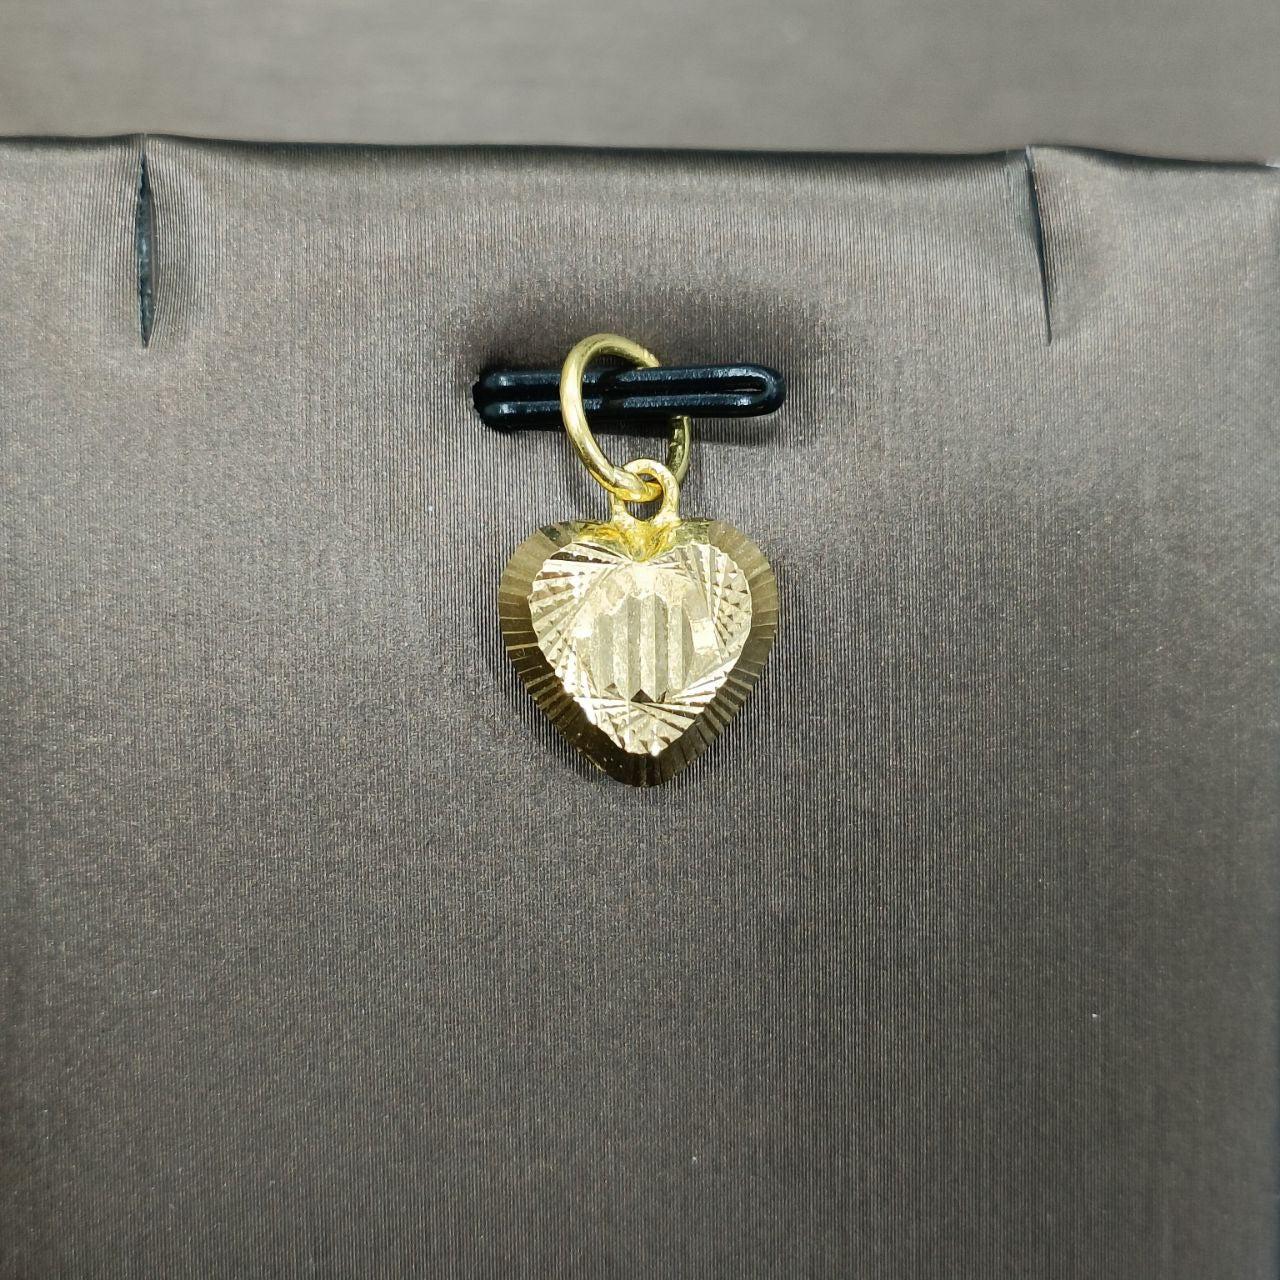 22k / 916 Gold Heart Cutting Pendant V5-916 gold-Best Gold Shop